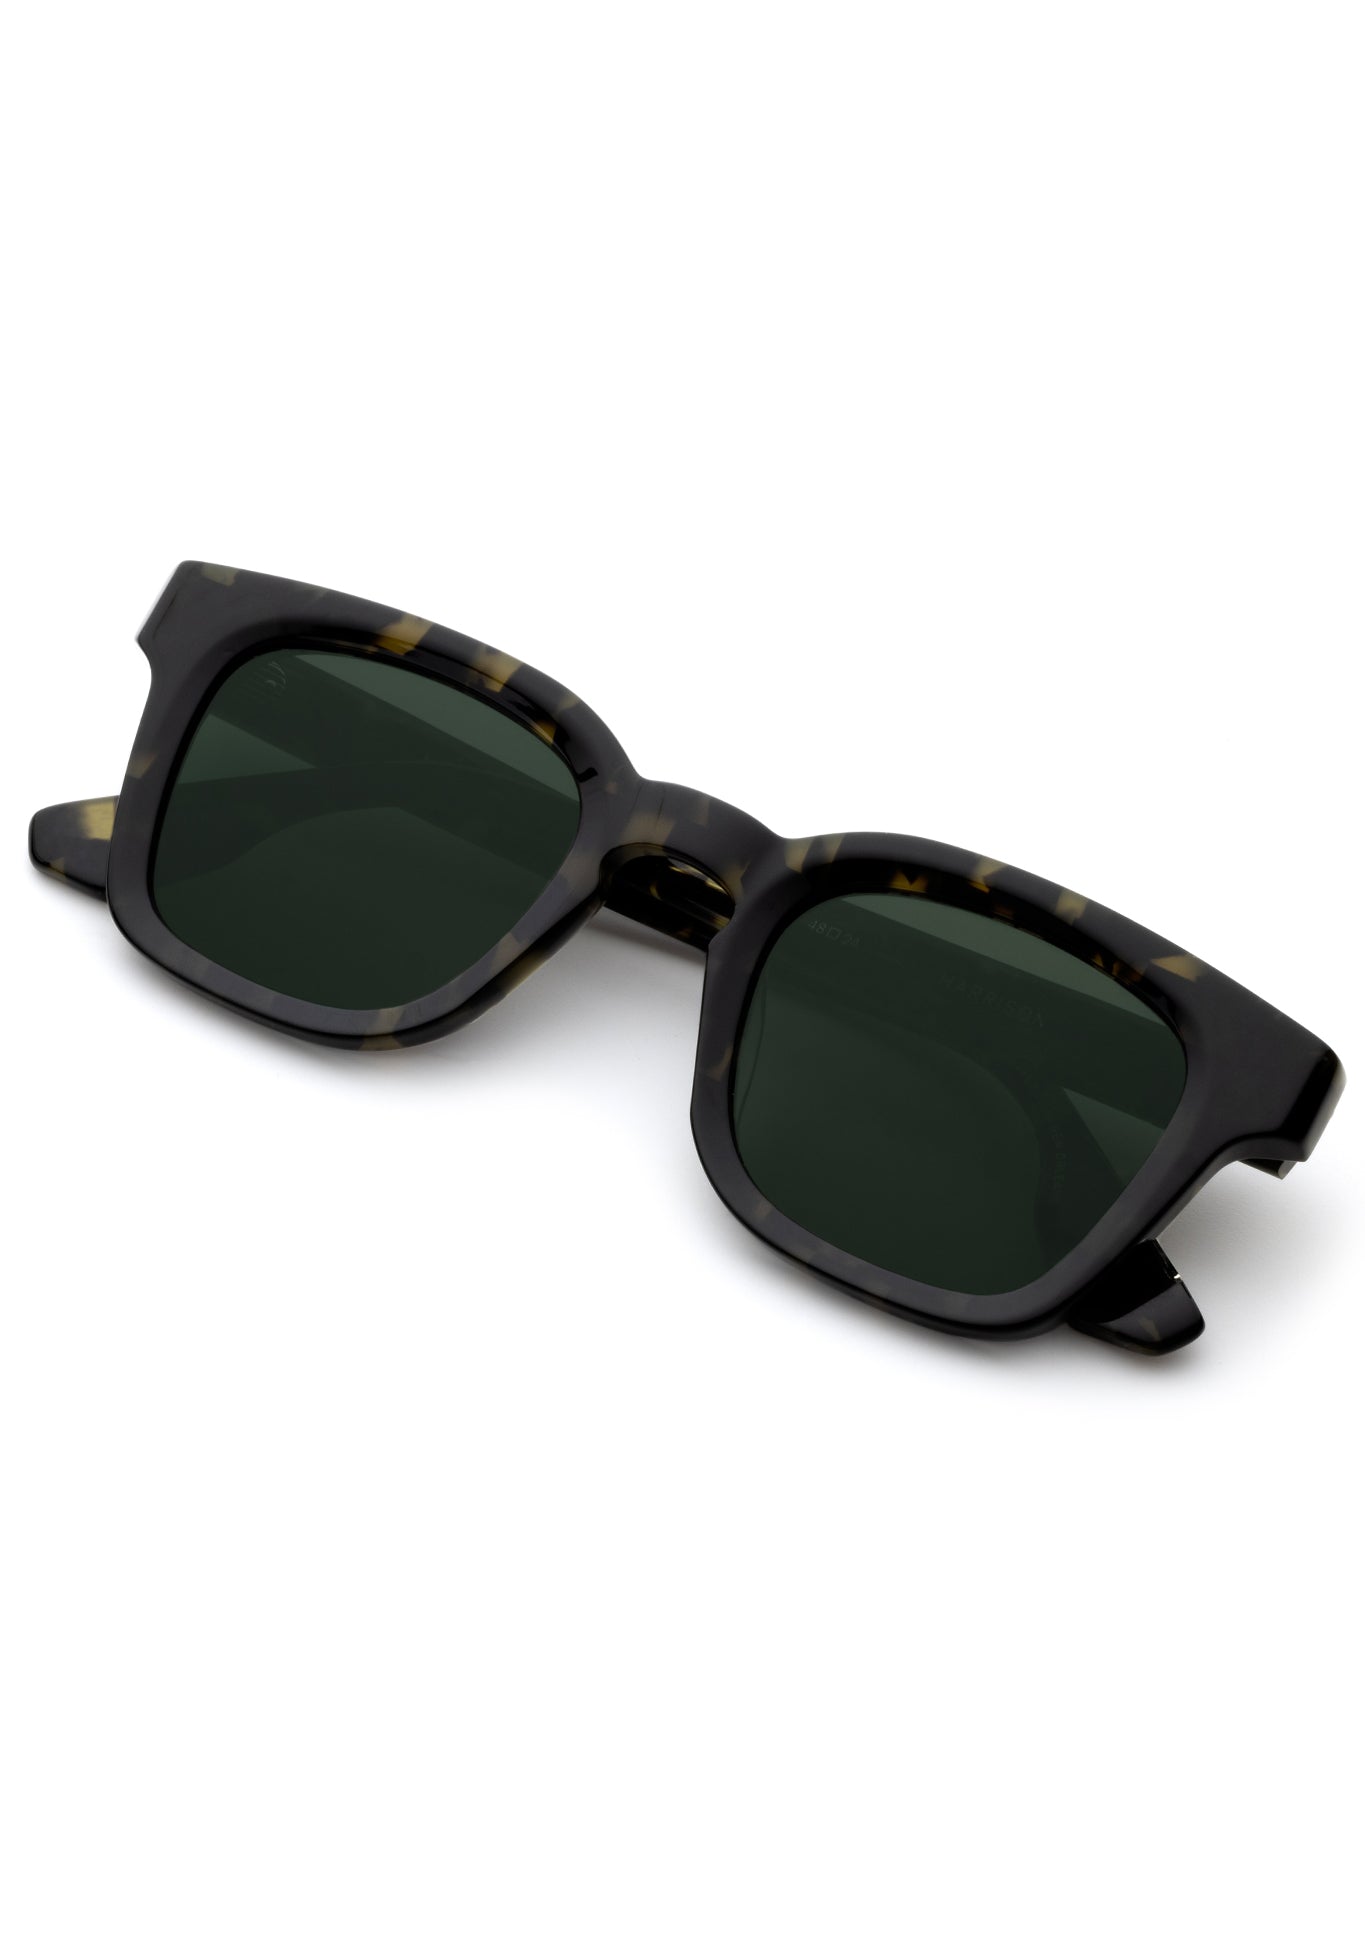 HARRISON | Tortuga Noir Handcrafted, dark brown and black acetate square KREWE sunglasses